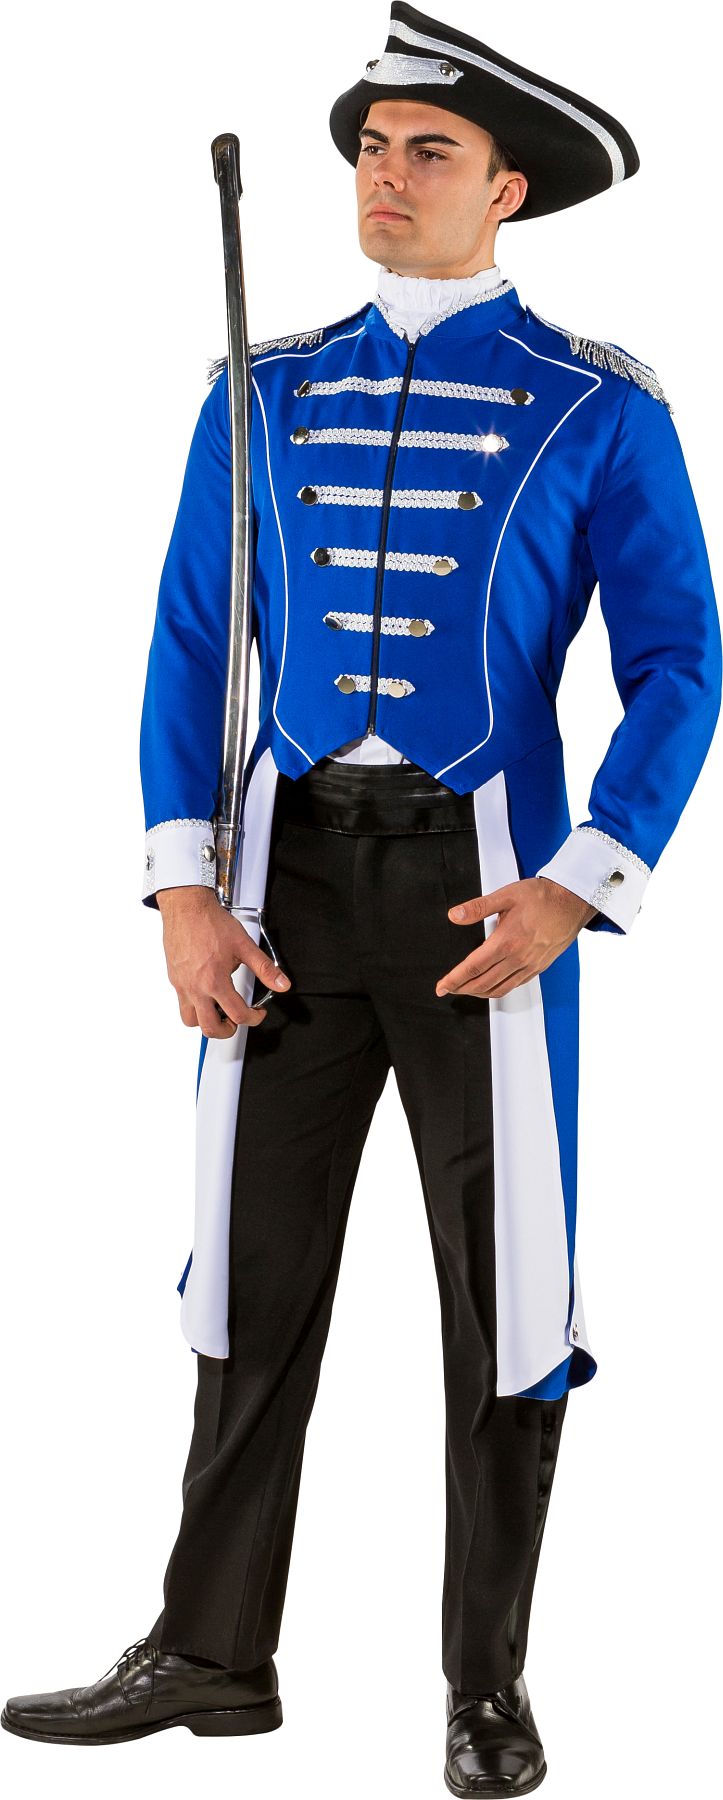 Guardemajor Tailcoat, blue